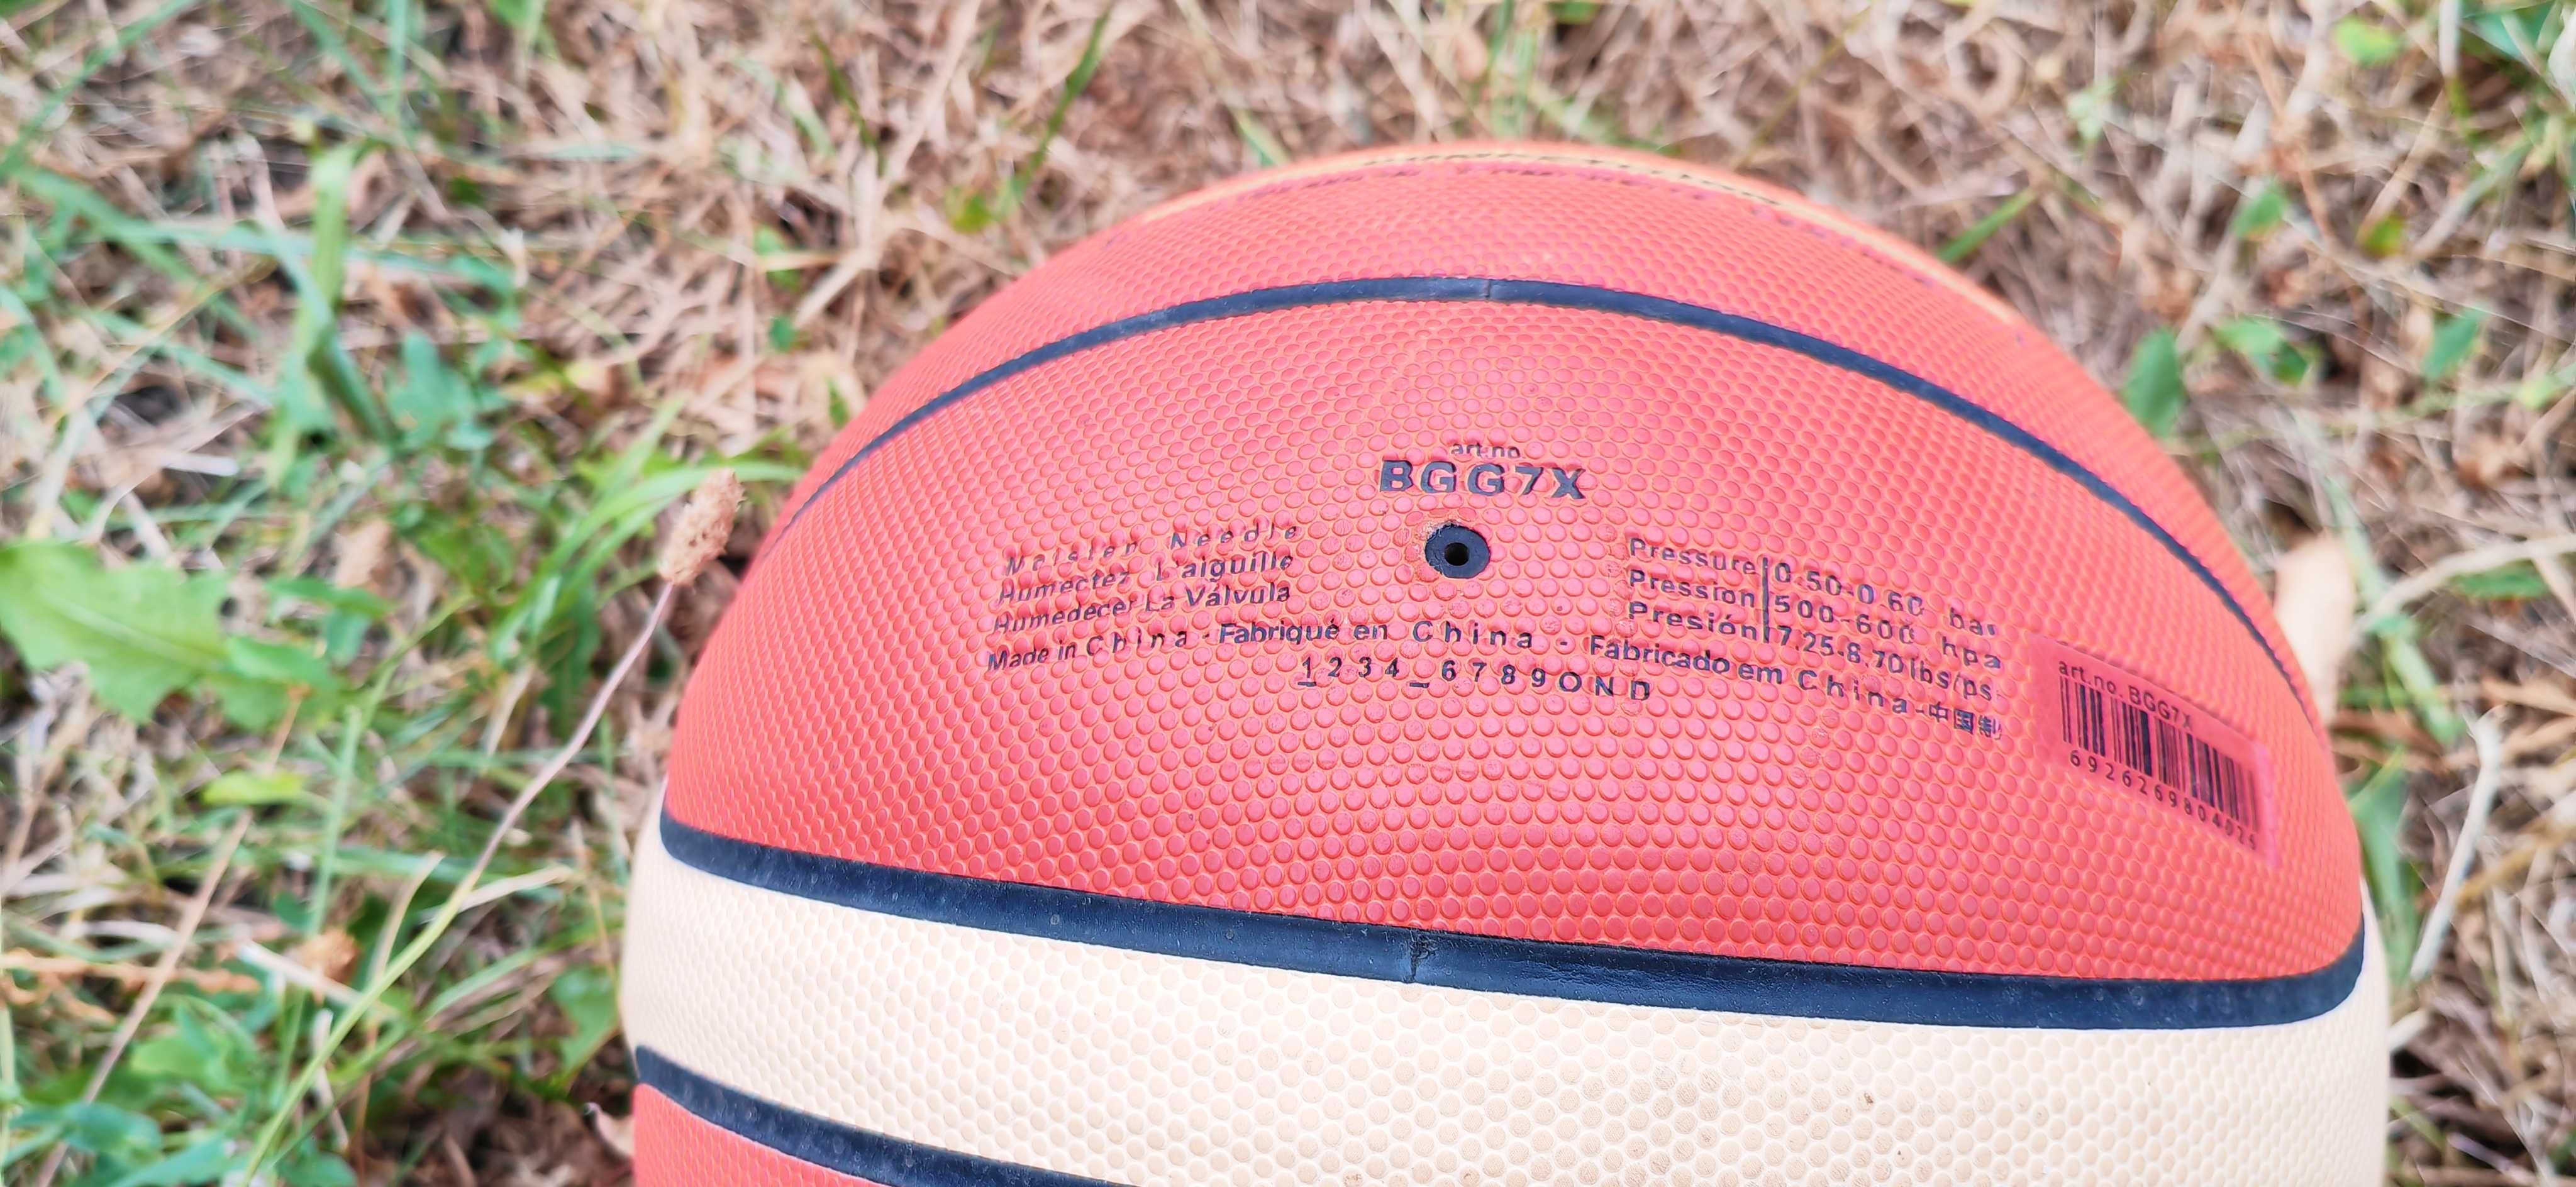 MOLTEN Баскетболна топка BGG7X GG7X чисто нова с мрежа за пренос игла